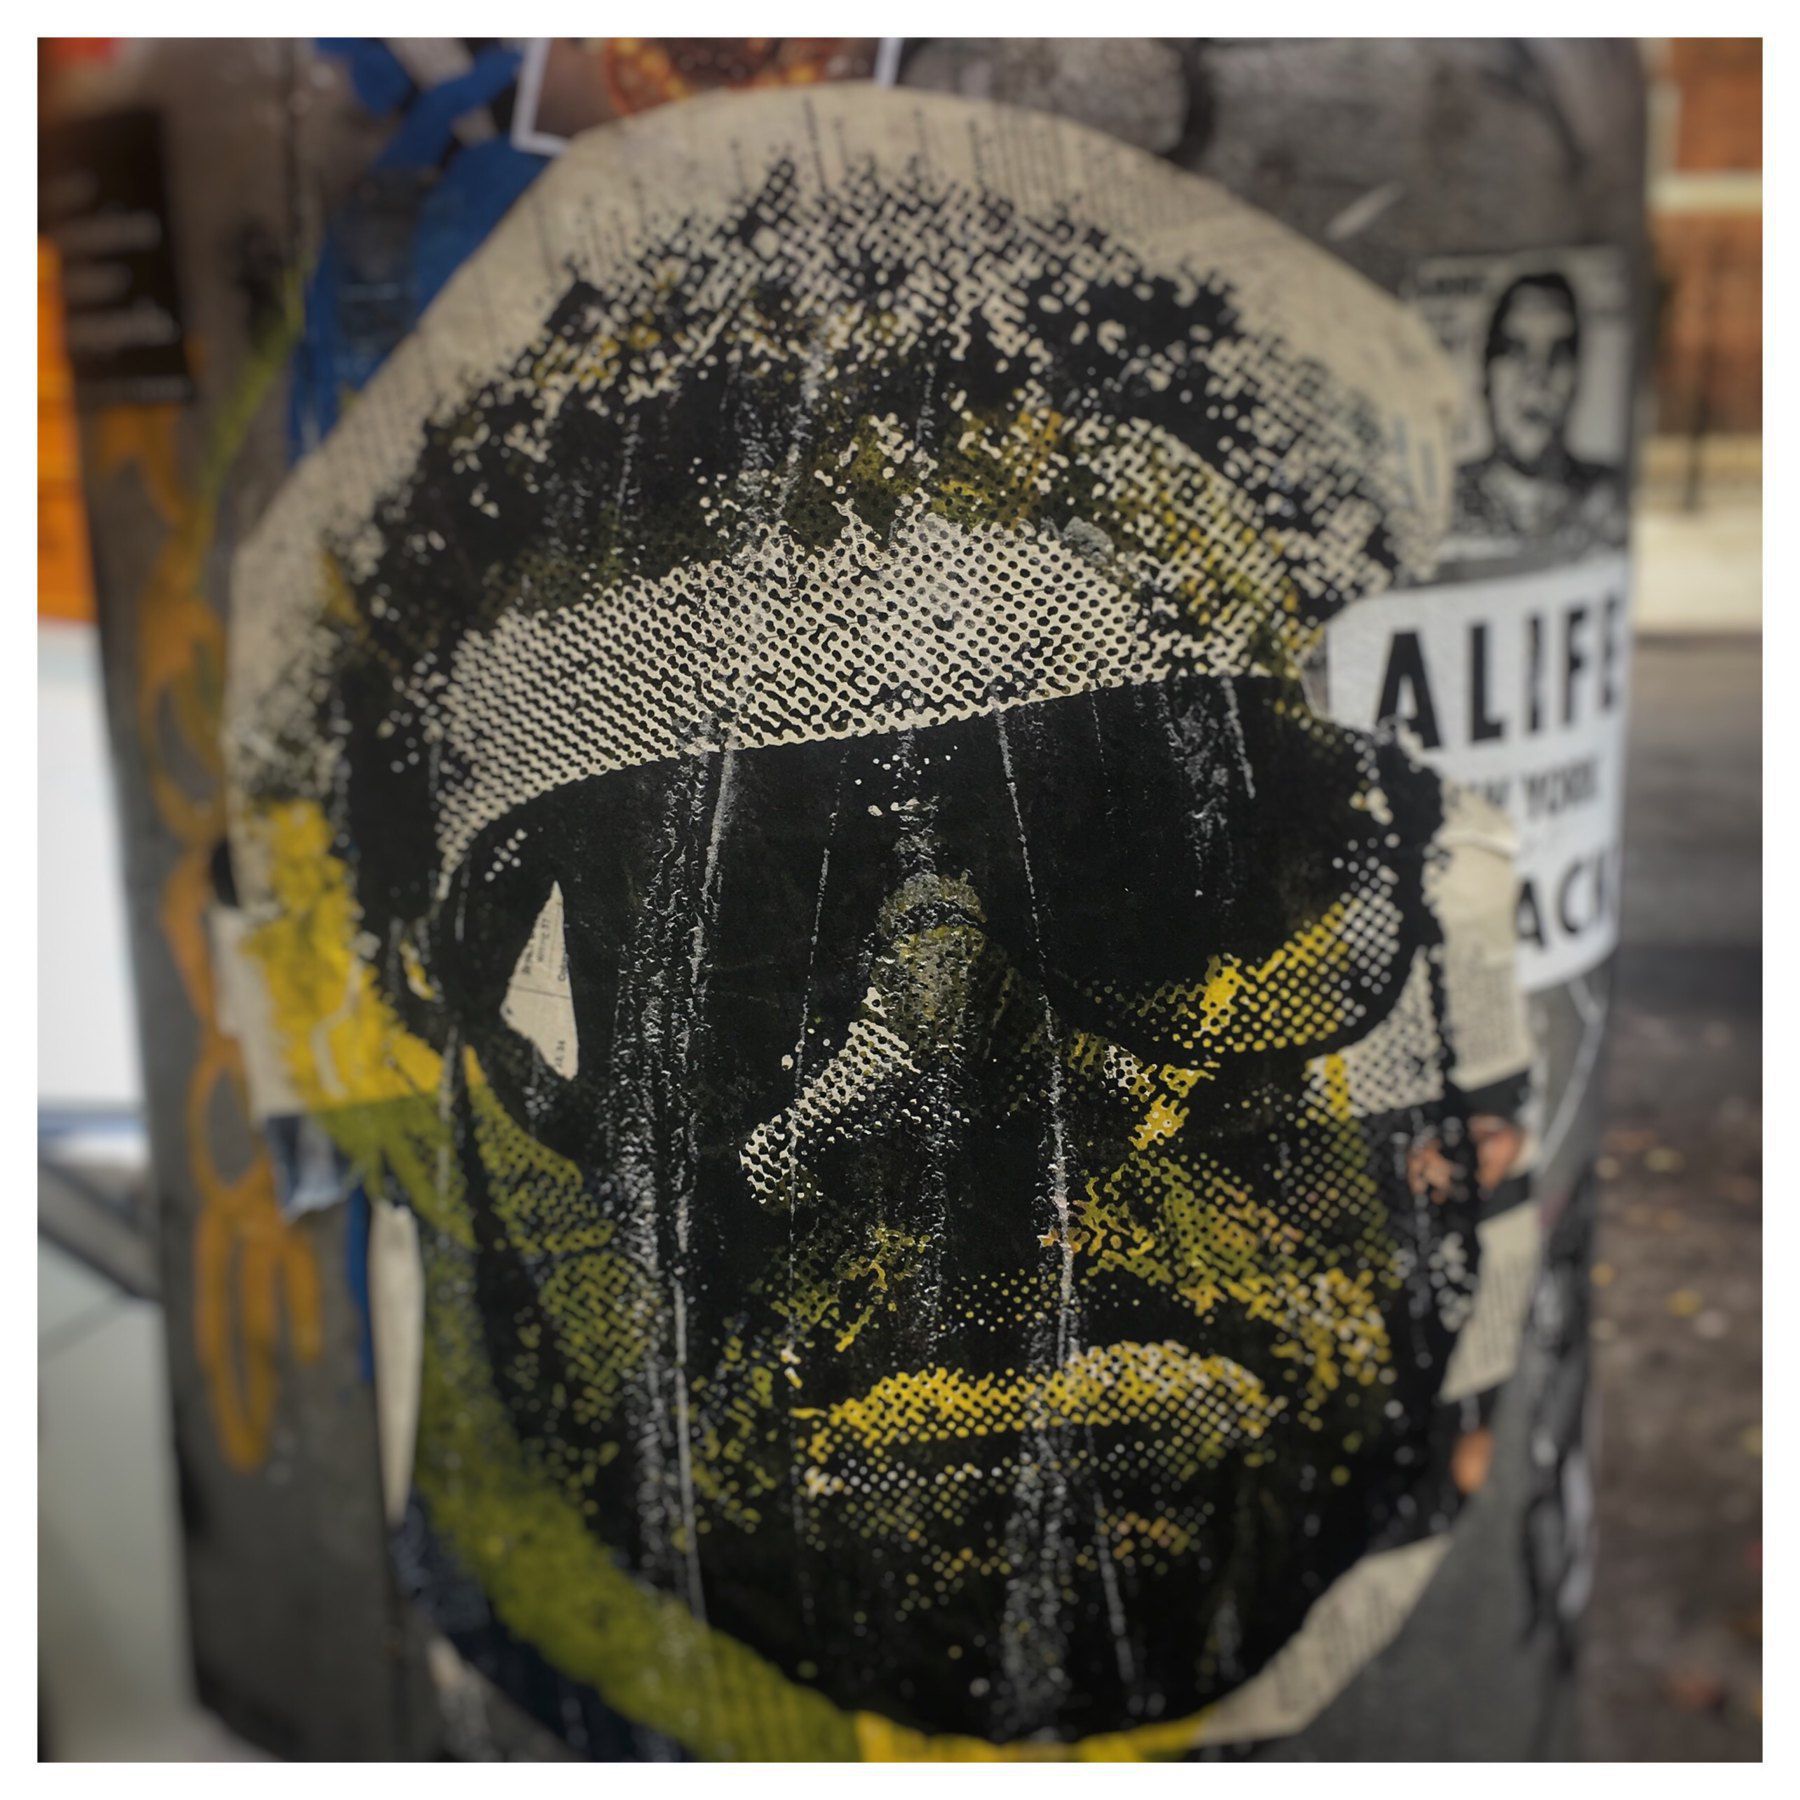 Sticker on a street pole of a tough guy wearing dark sunglasses